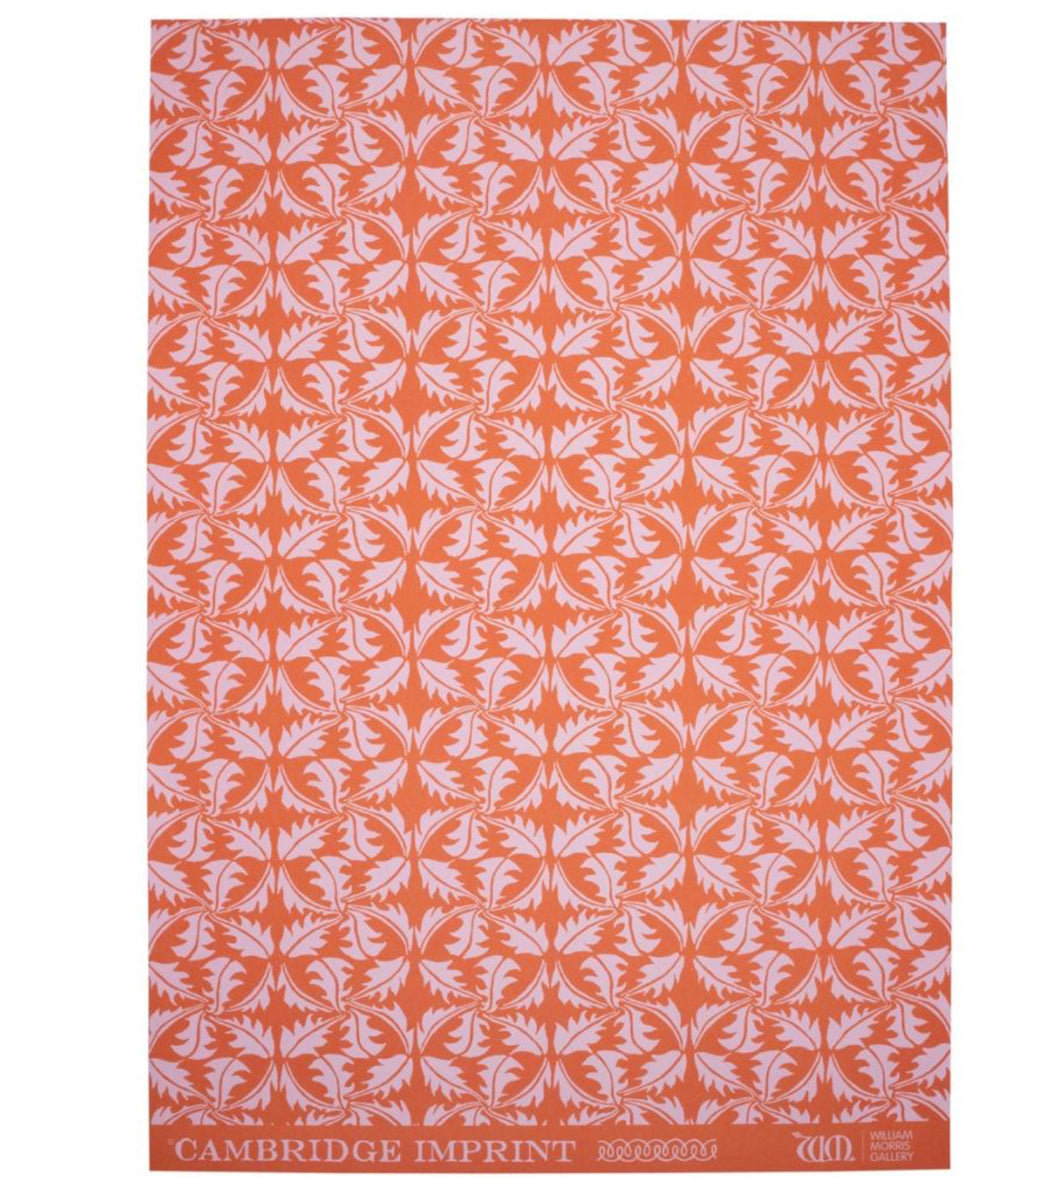 Cambridge Imprint Patterned Paper - Dandielion - Rose and Rust